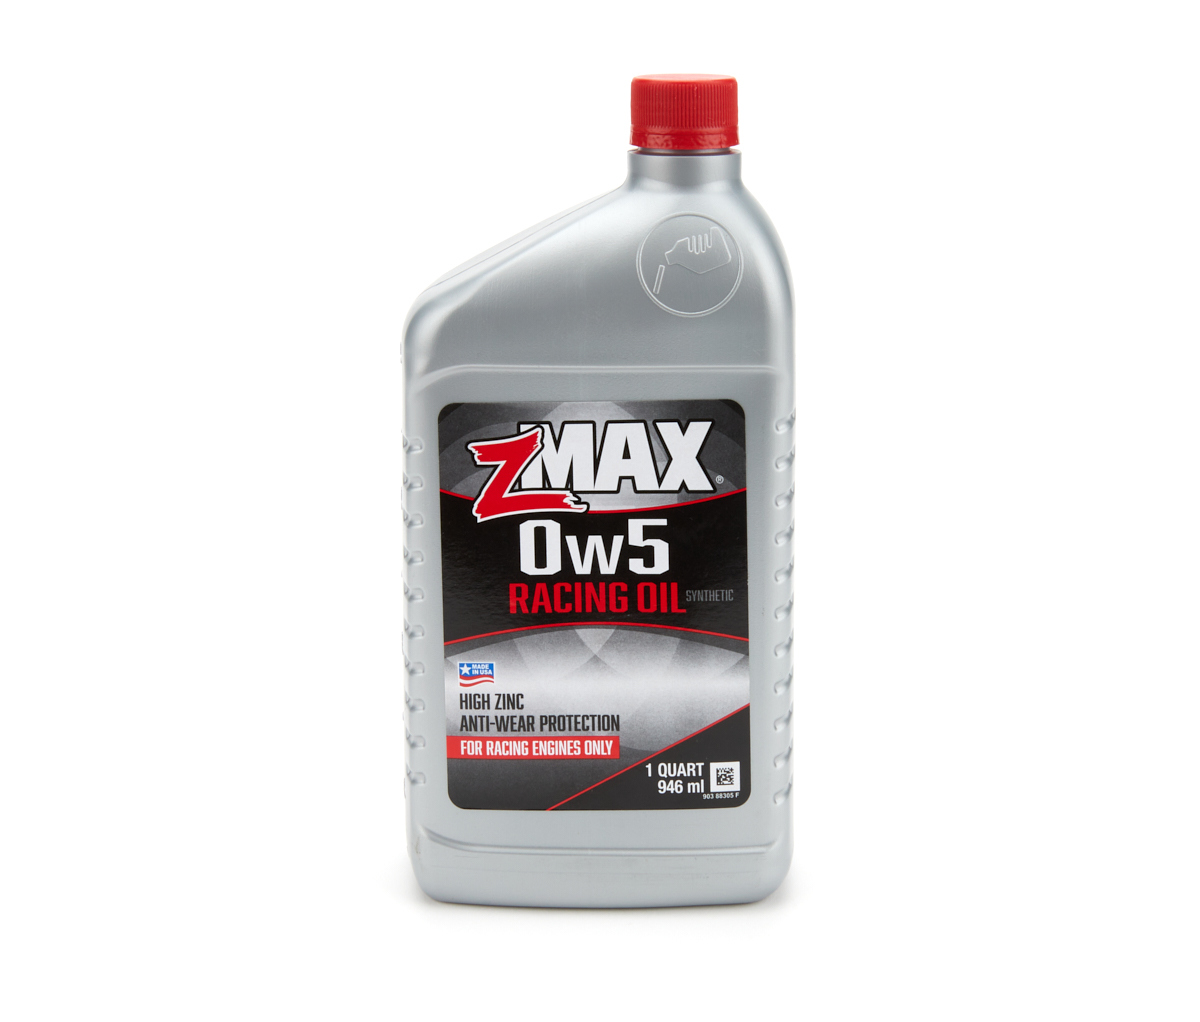 ZMAX Motor Oil Racing High Zinc 0W5 Synthetic 1 qt Bottle Each